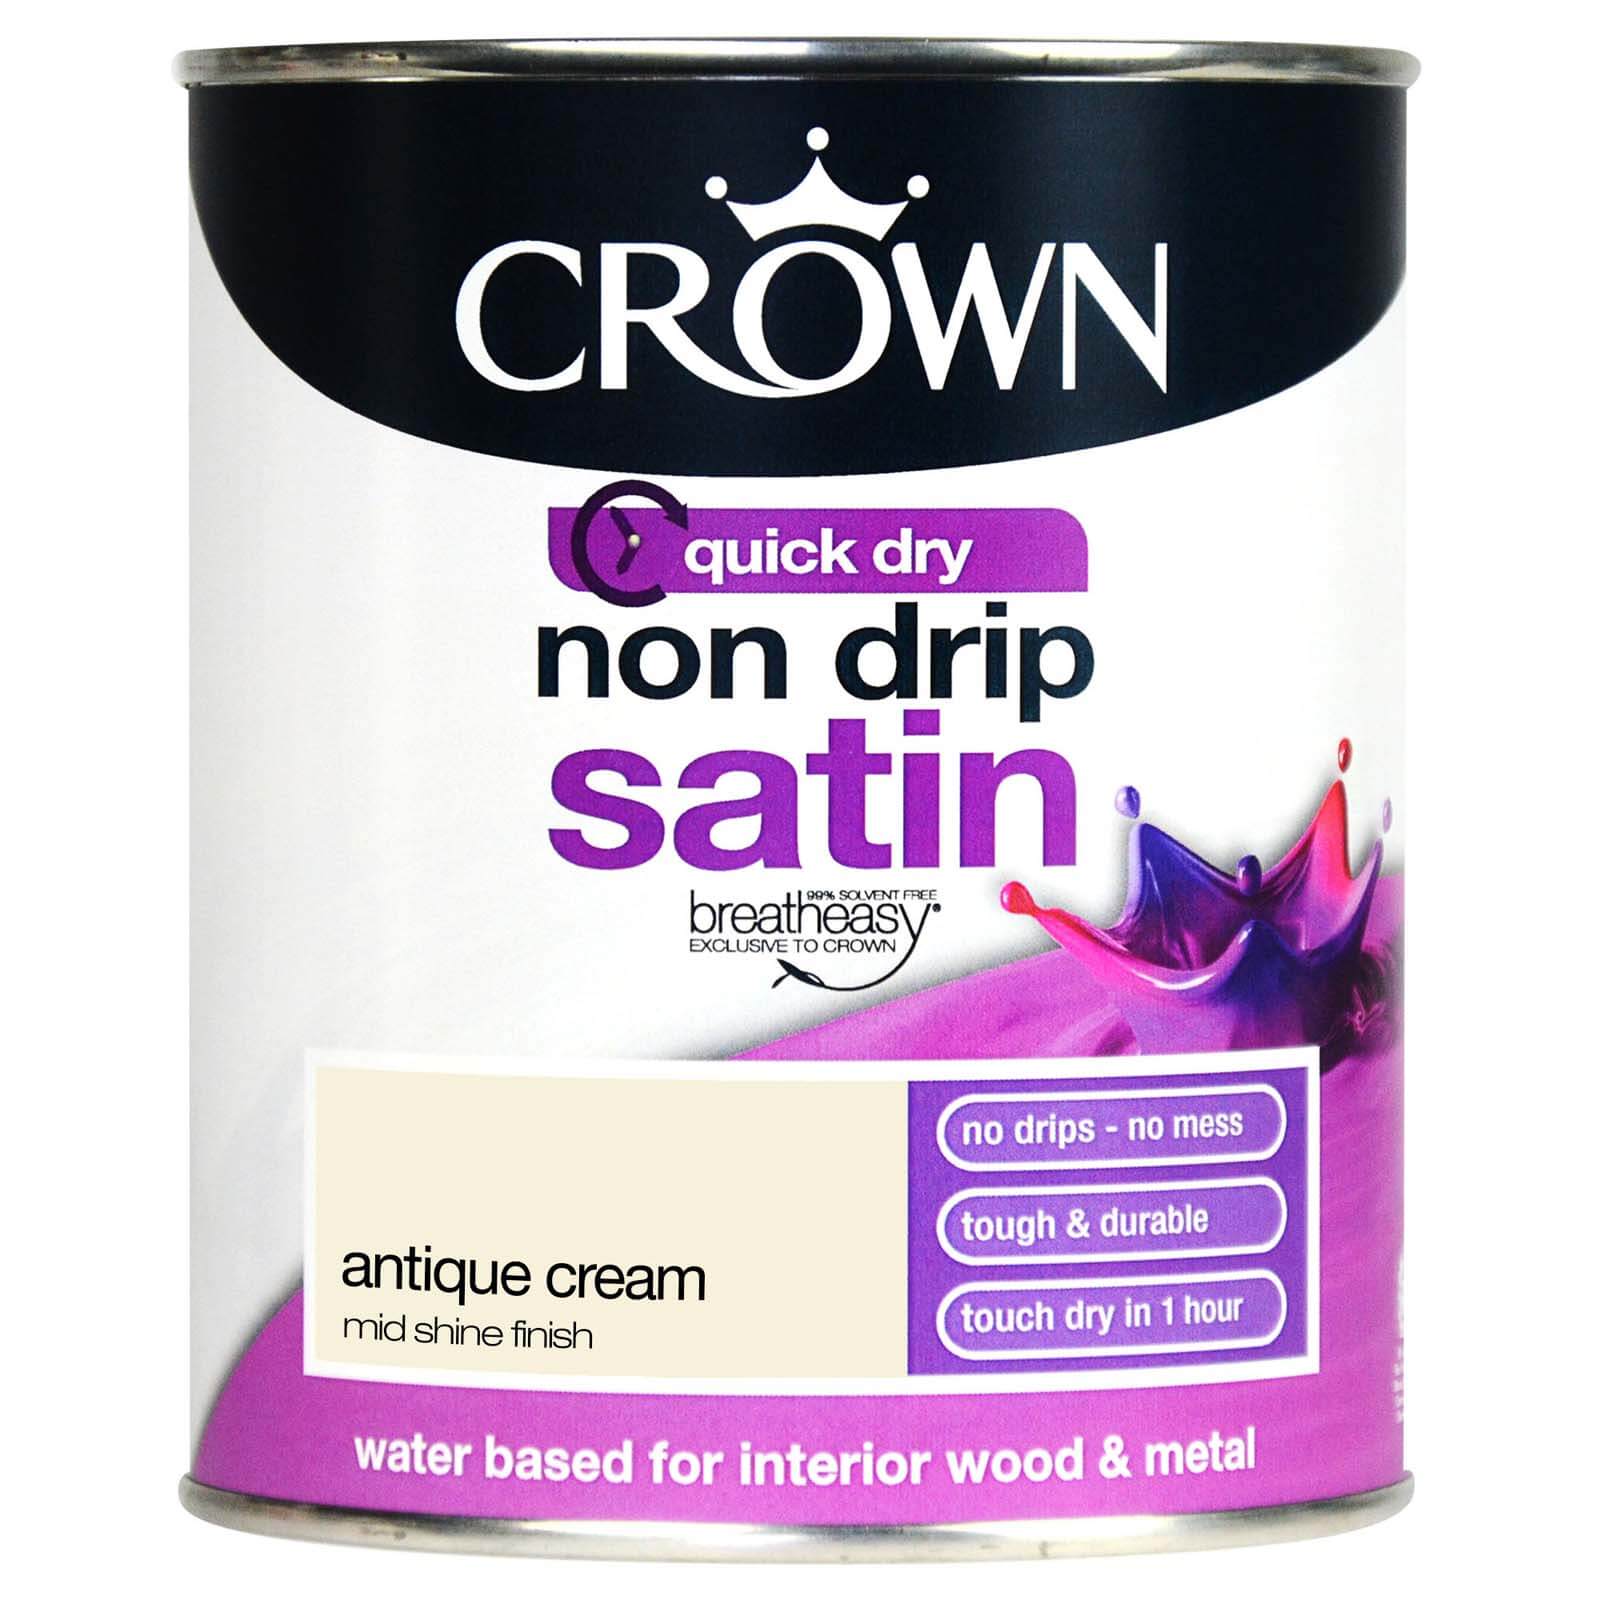 Crown Breatheasy Non Drip Satin Paint Antique Cream - 750ml